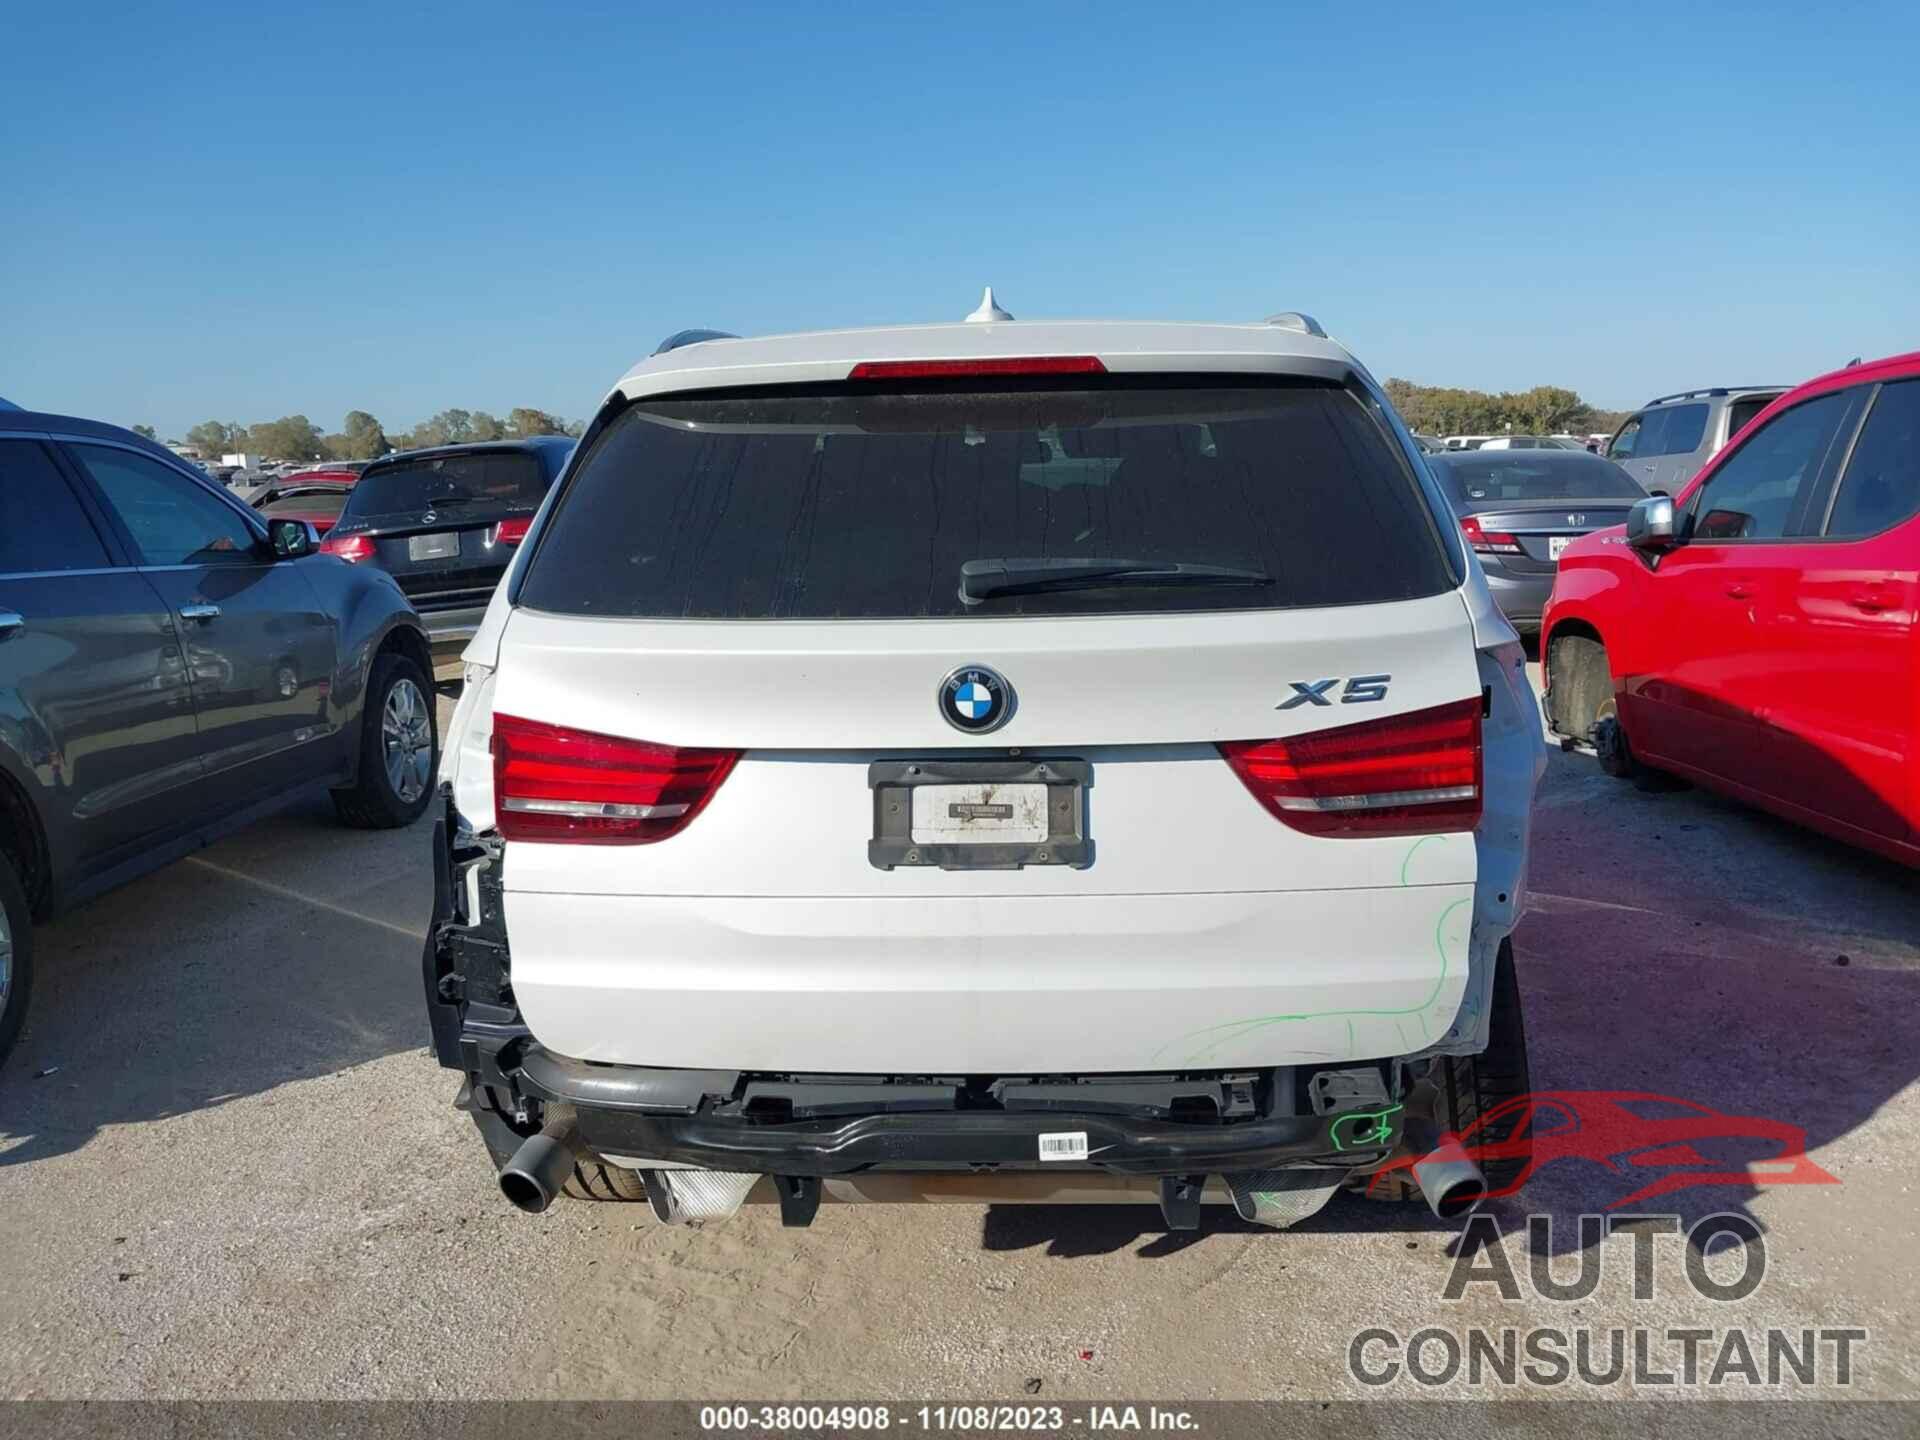 BMW X5 2017 - 5UXKR0C59H0V49678